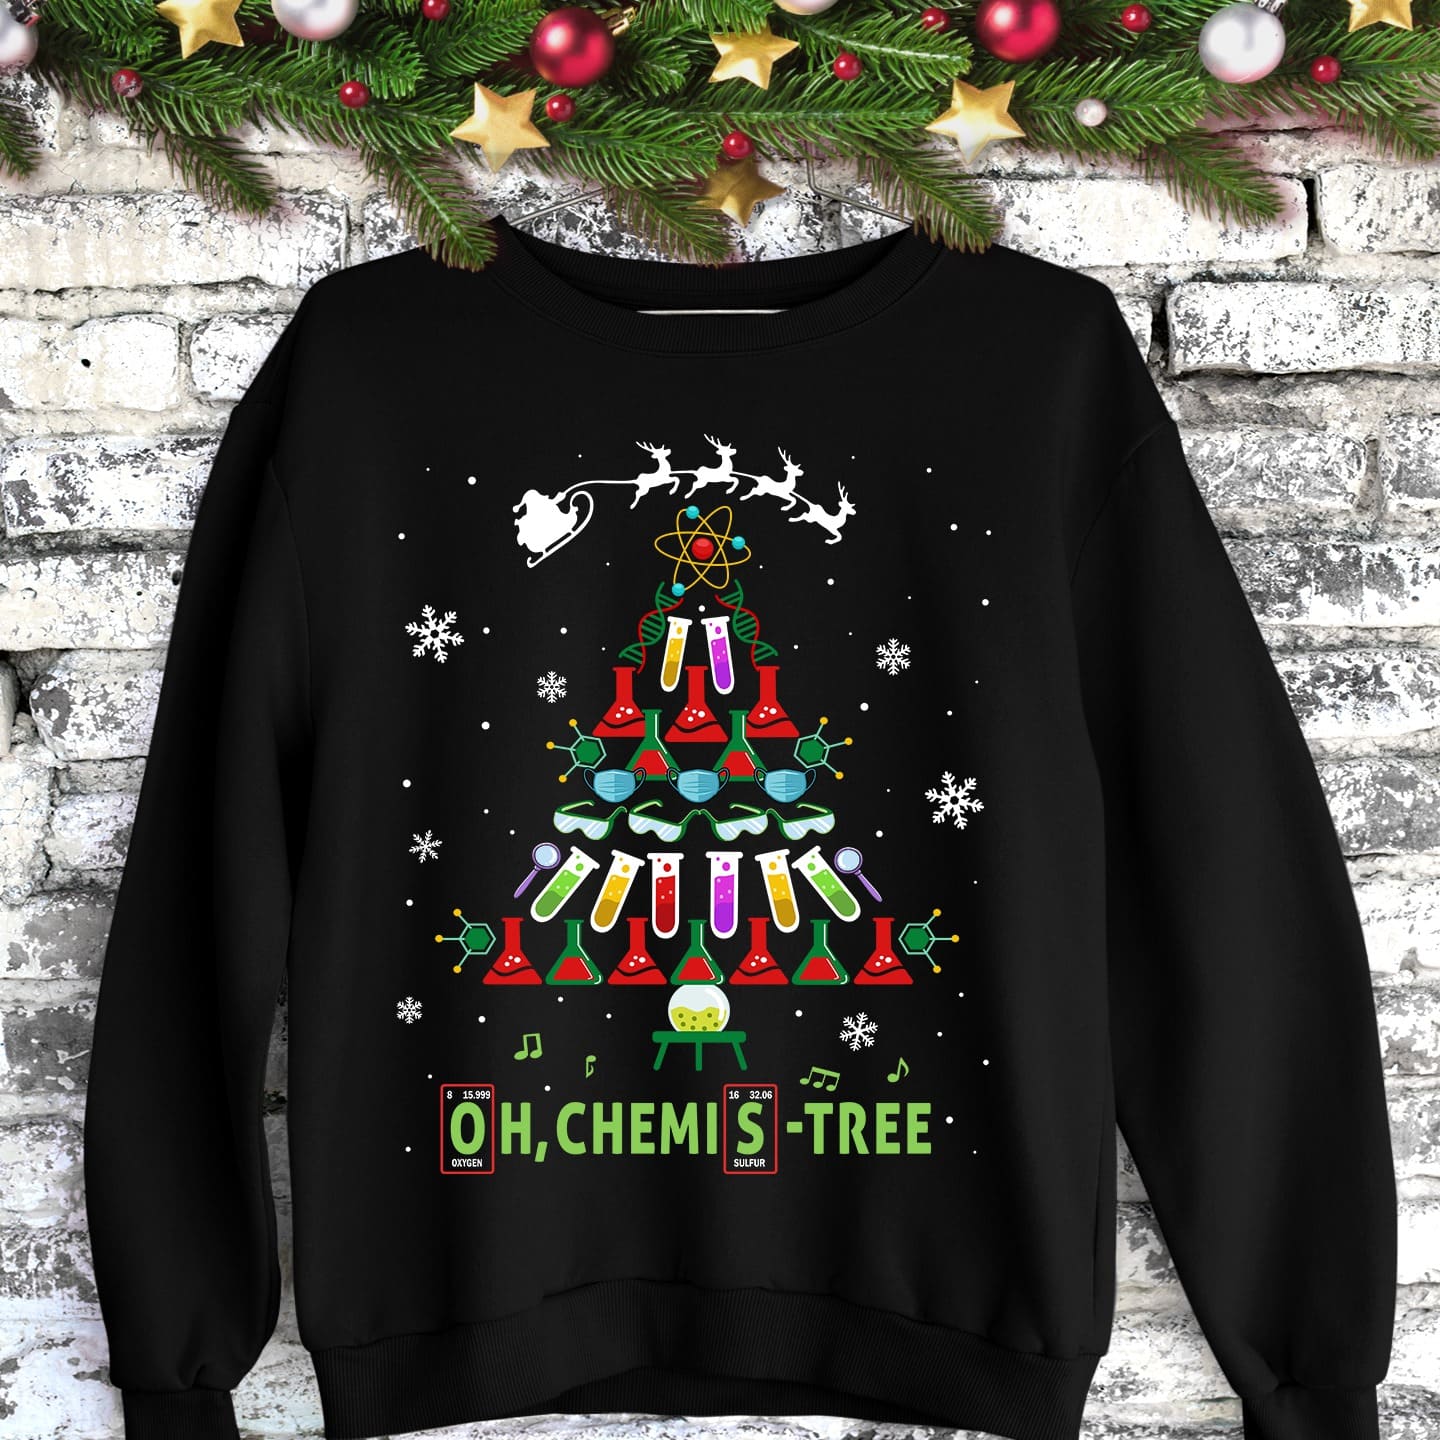 Chemis tree - Chesmistry Christmas tree, gift for chesmistry researcher